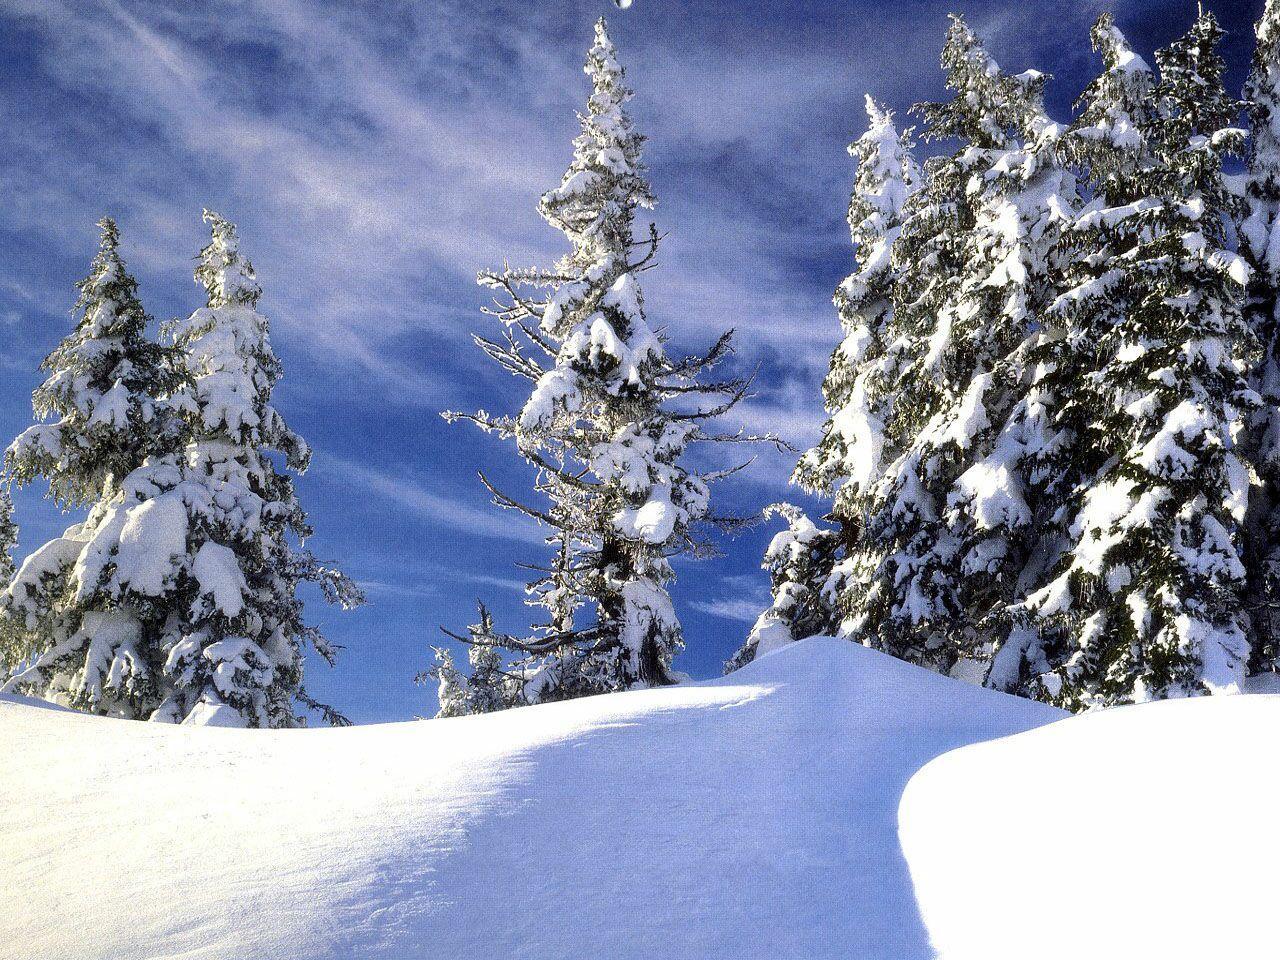 Snowy pines free desktop background wallpaper image